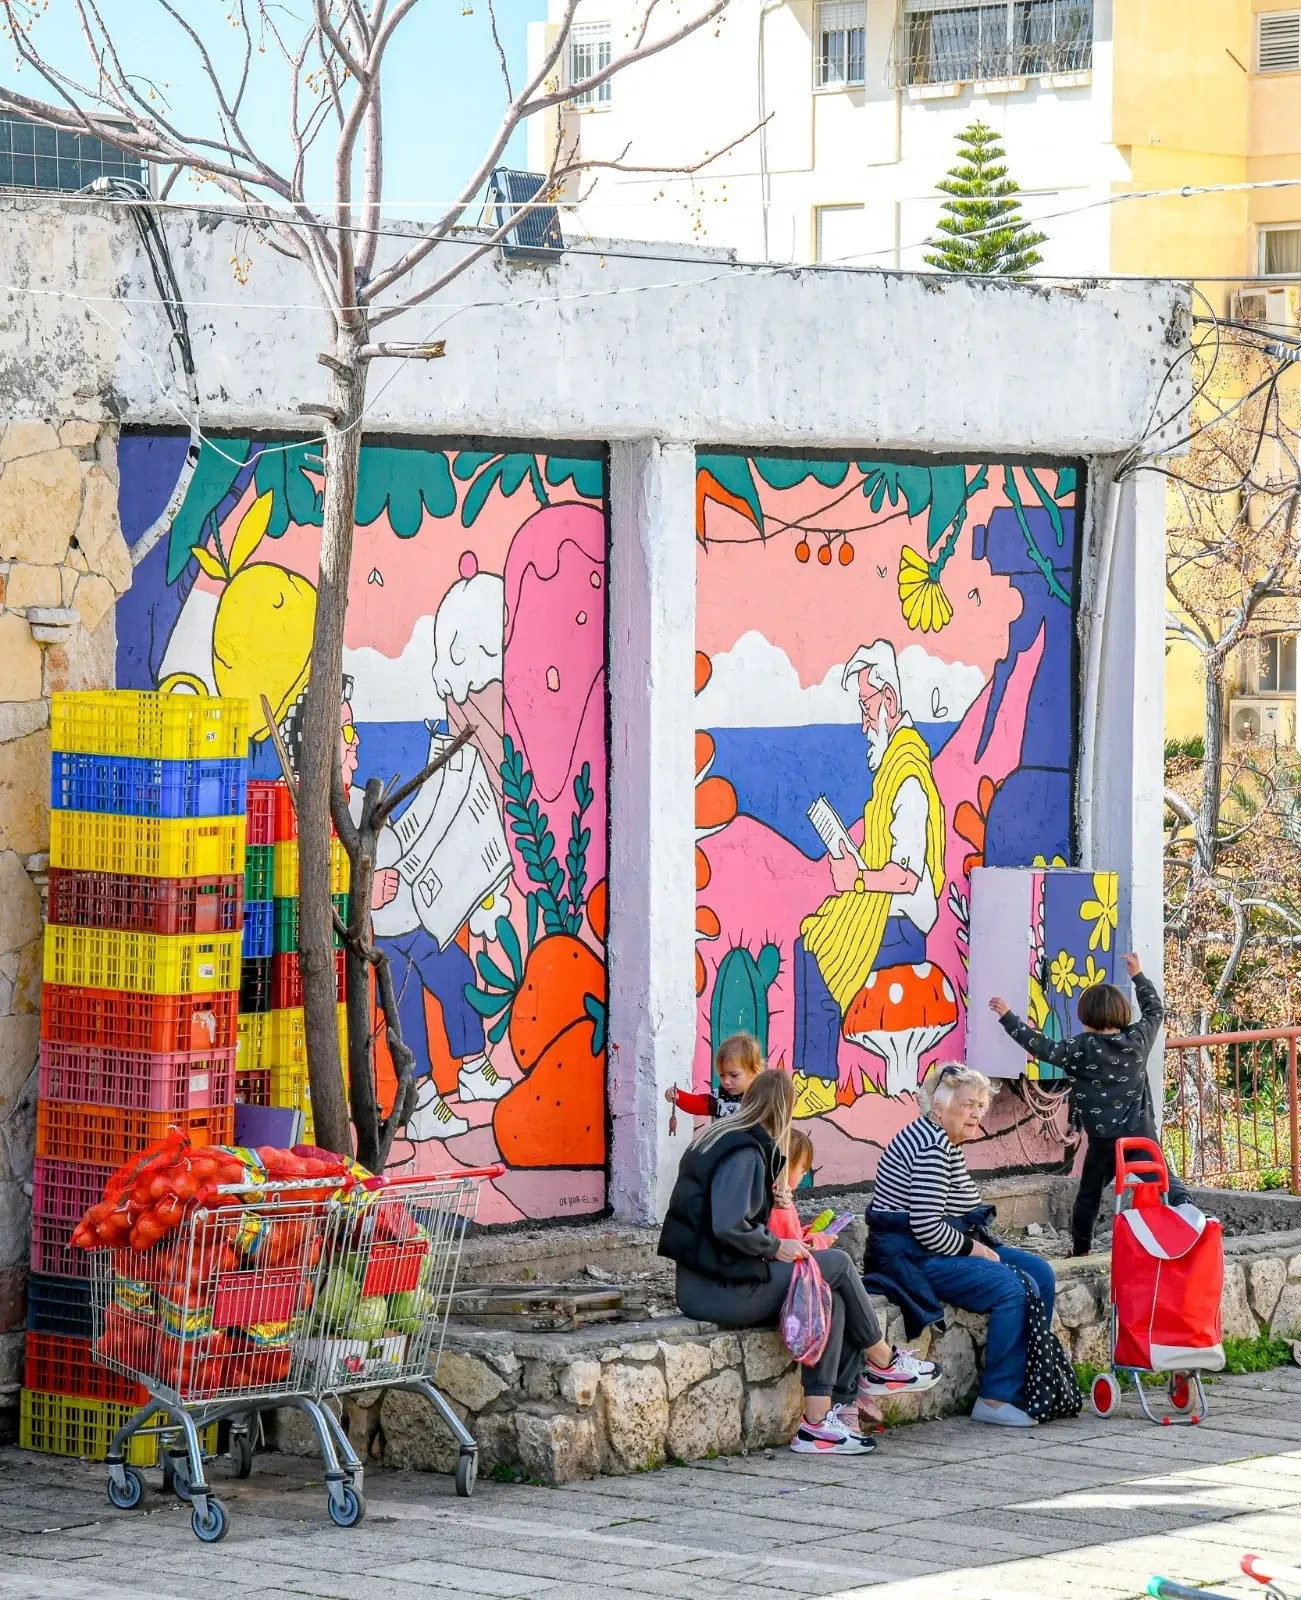  Bringing art to commercial centers in Haifa. Credit - Nir Blazitzky, spokeswoman for Haifa Municipality.